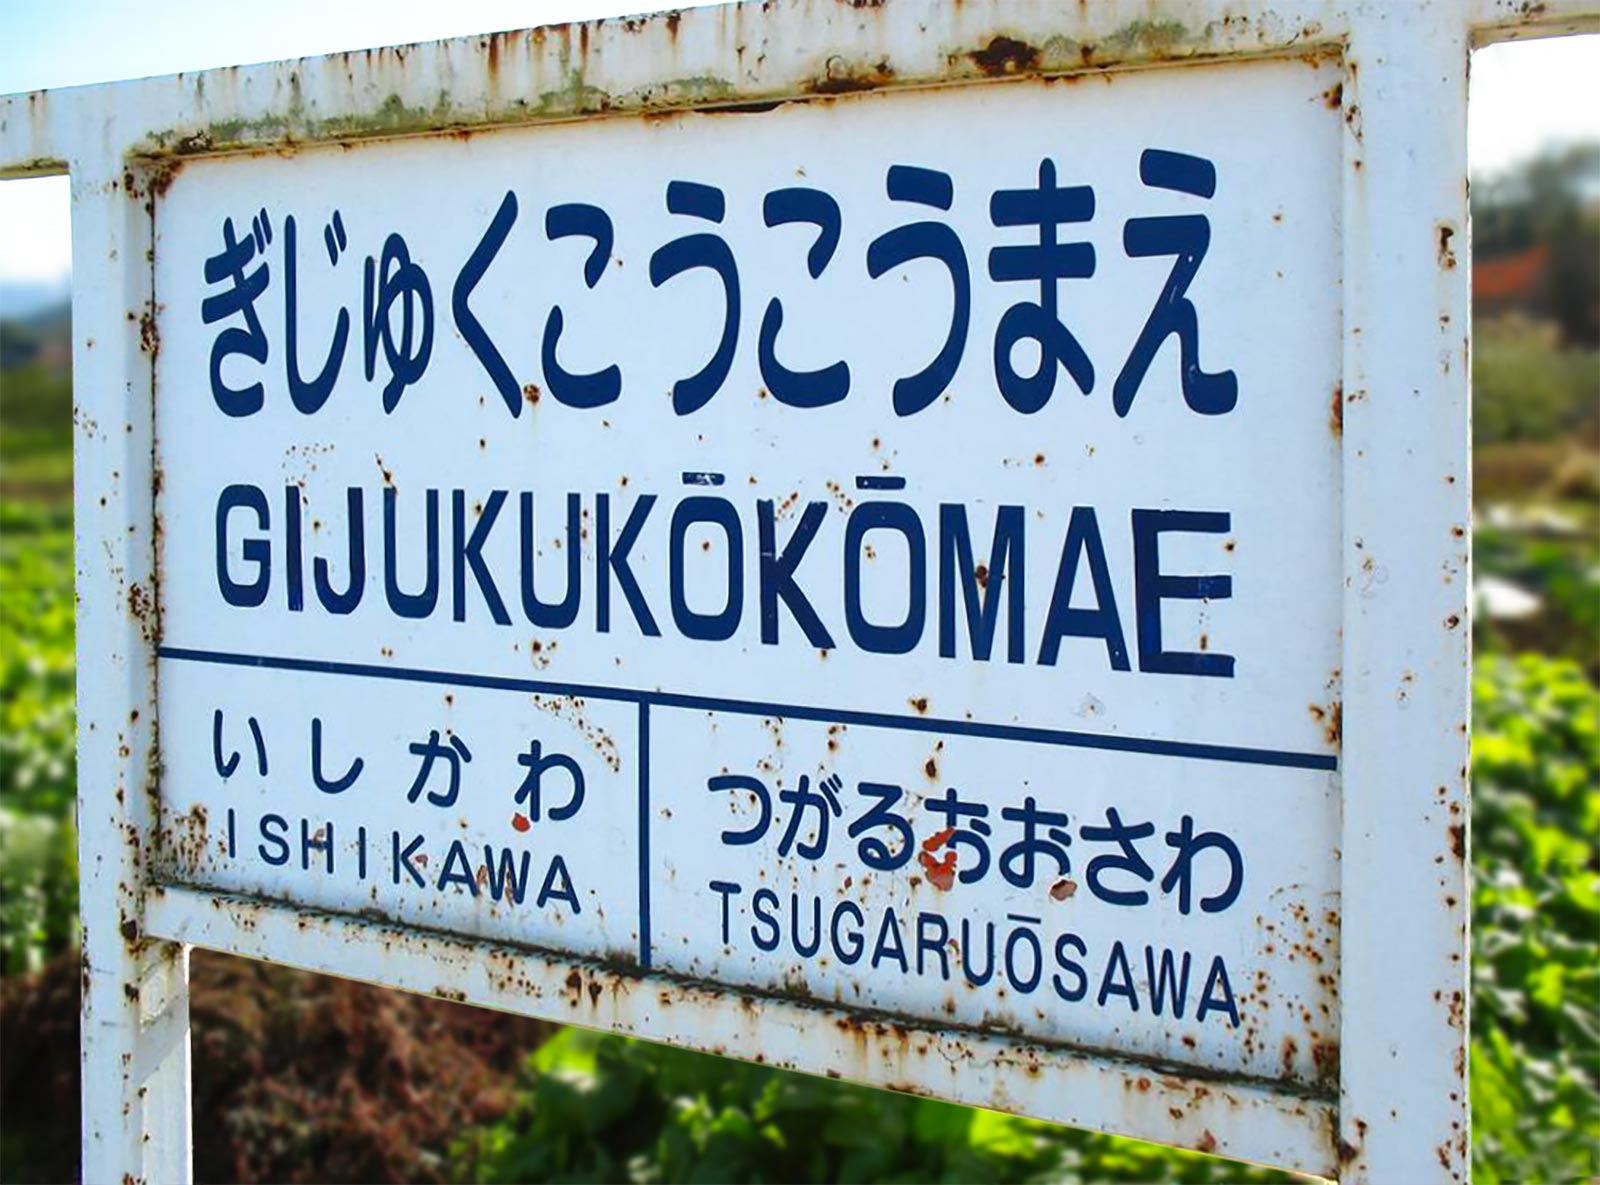 Typografie in Japan, Bahnhofsschild Gijukukokomae